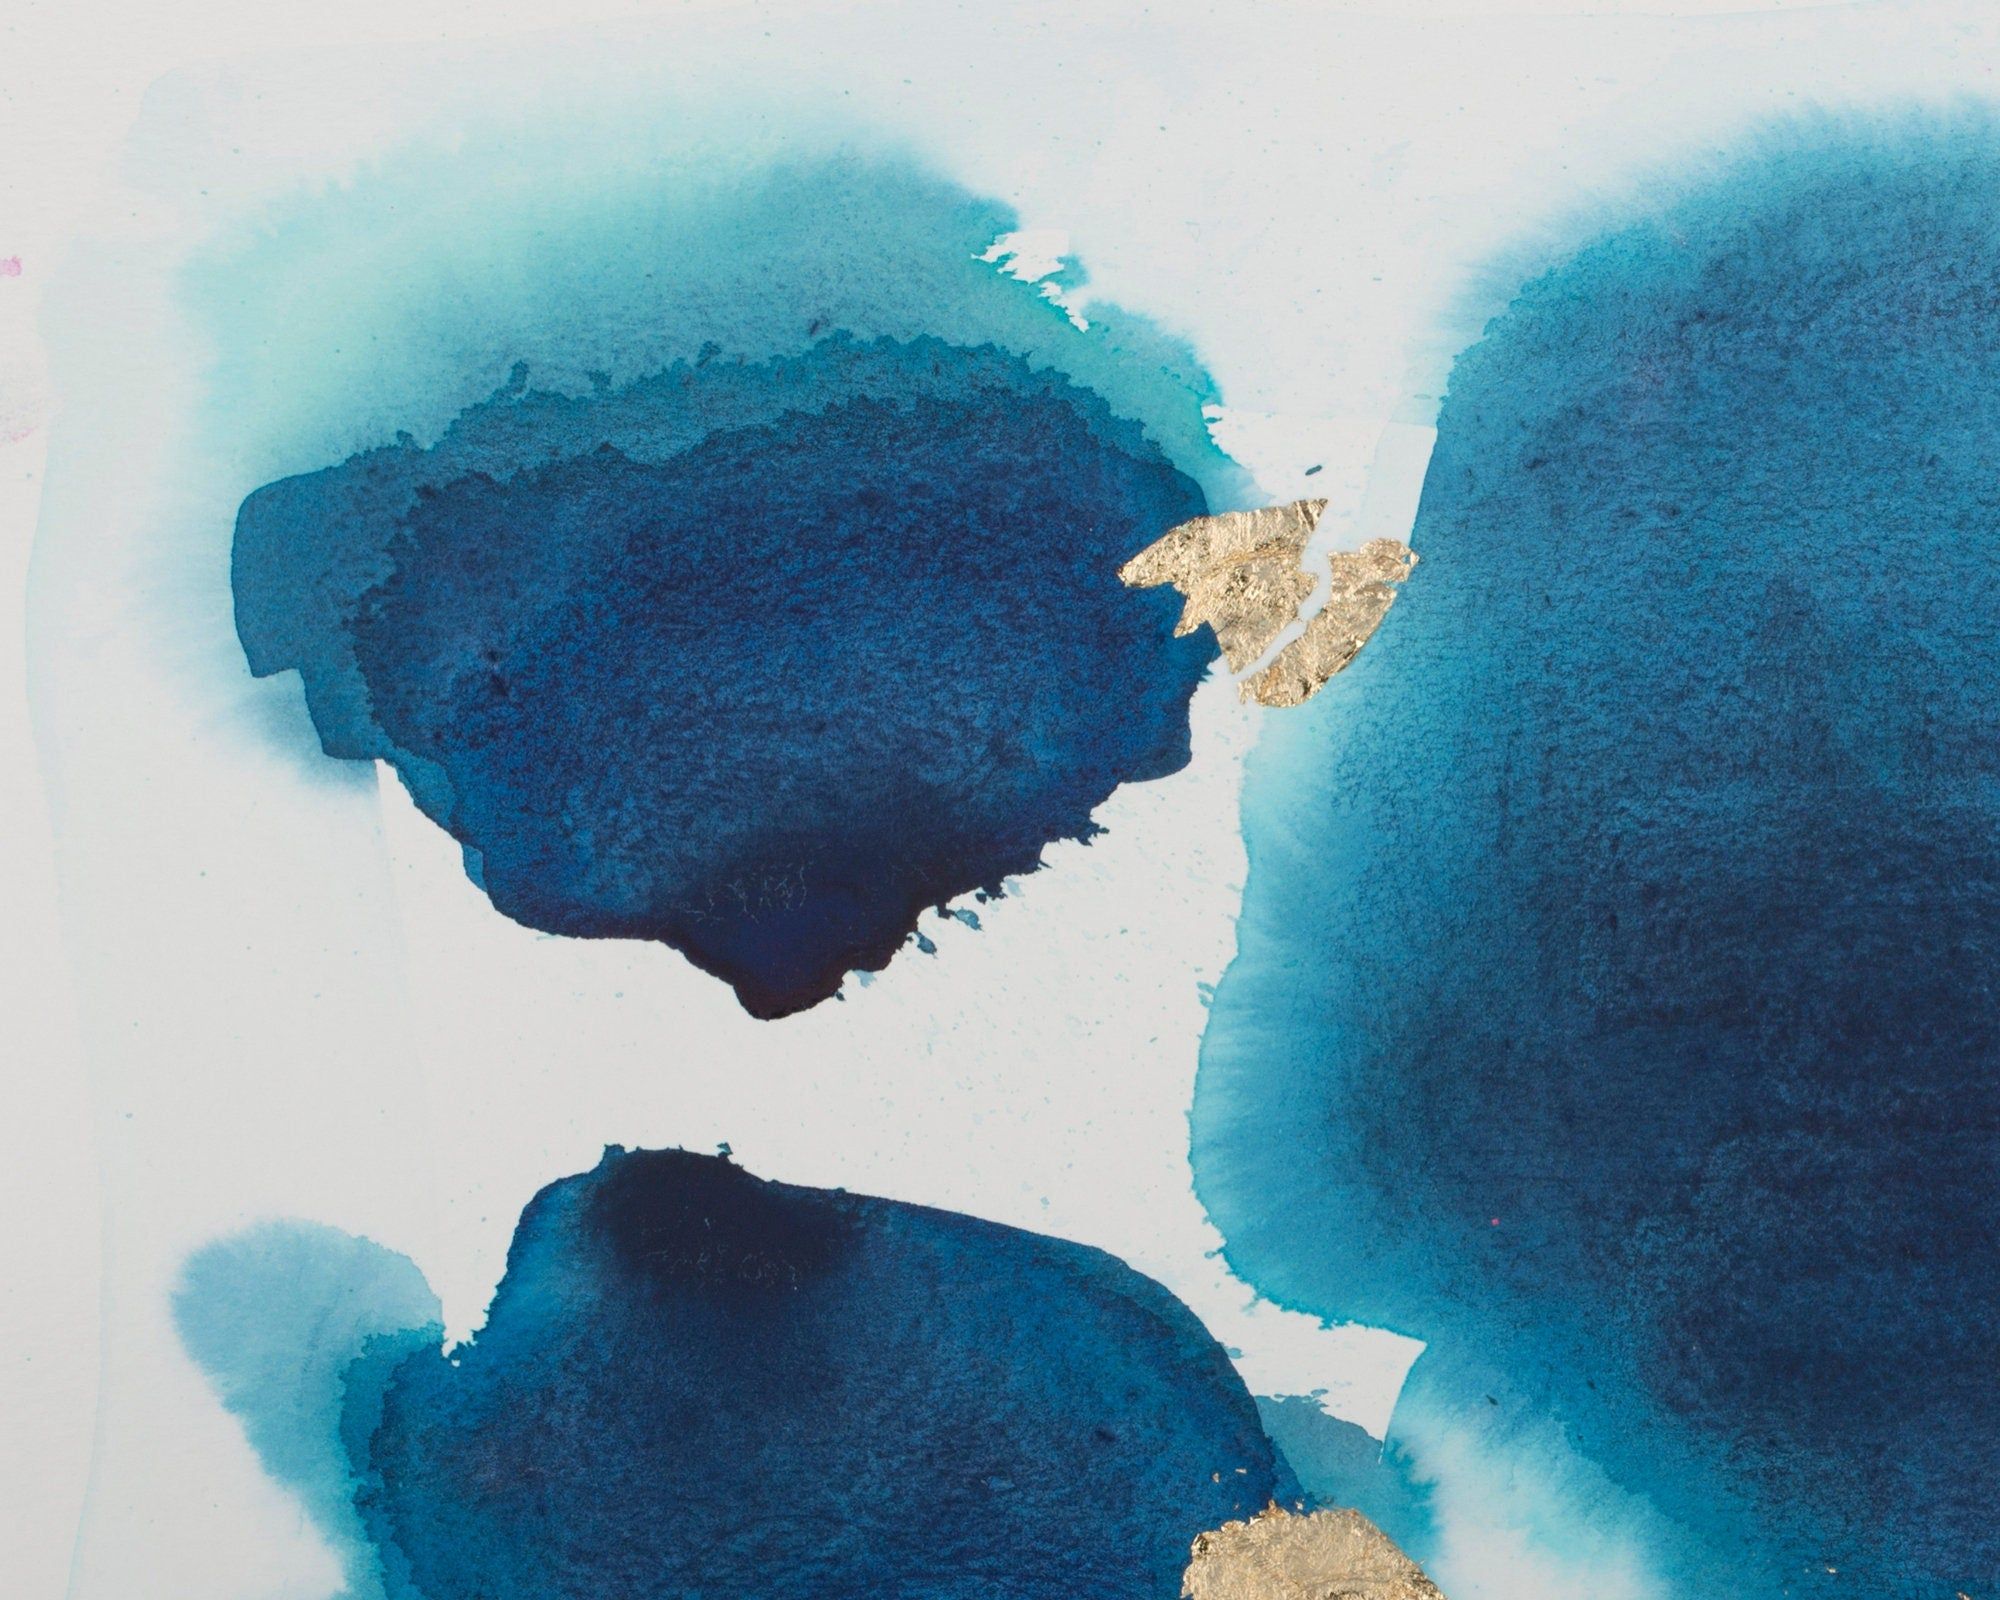  Boho Hintergrundbild 2000x1600. Boho Tapete original marineblaues Aquarell, neutrale und einfache Wohnzimmerdekoration Blattgoldmalerei